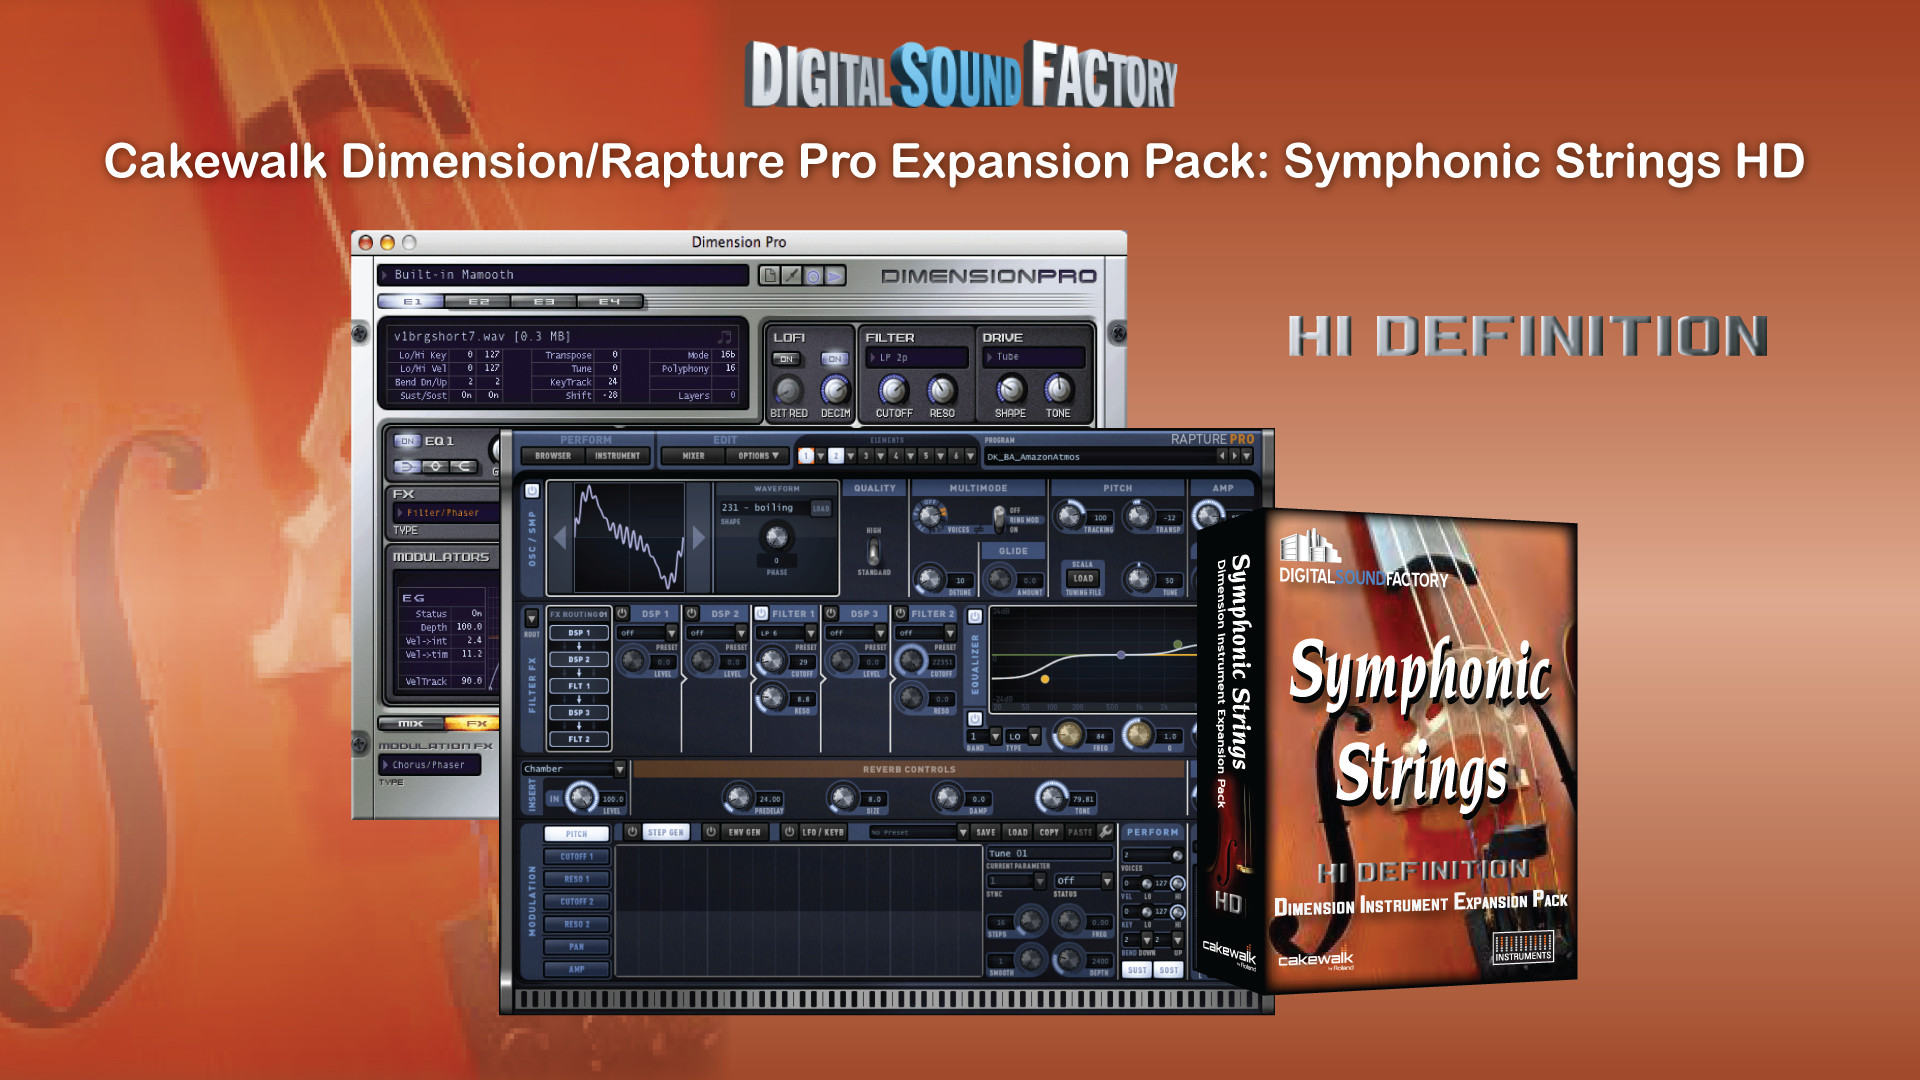 Digital Sound Factory - Symphonic Strings HD Featured Screenshot #1